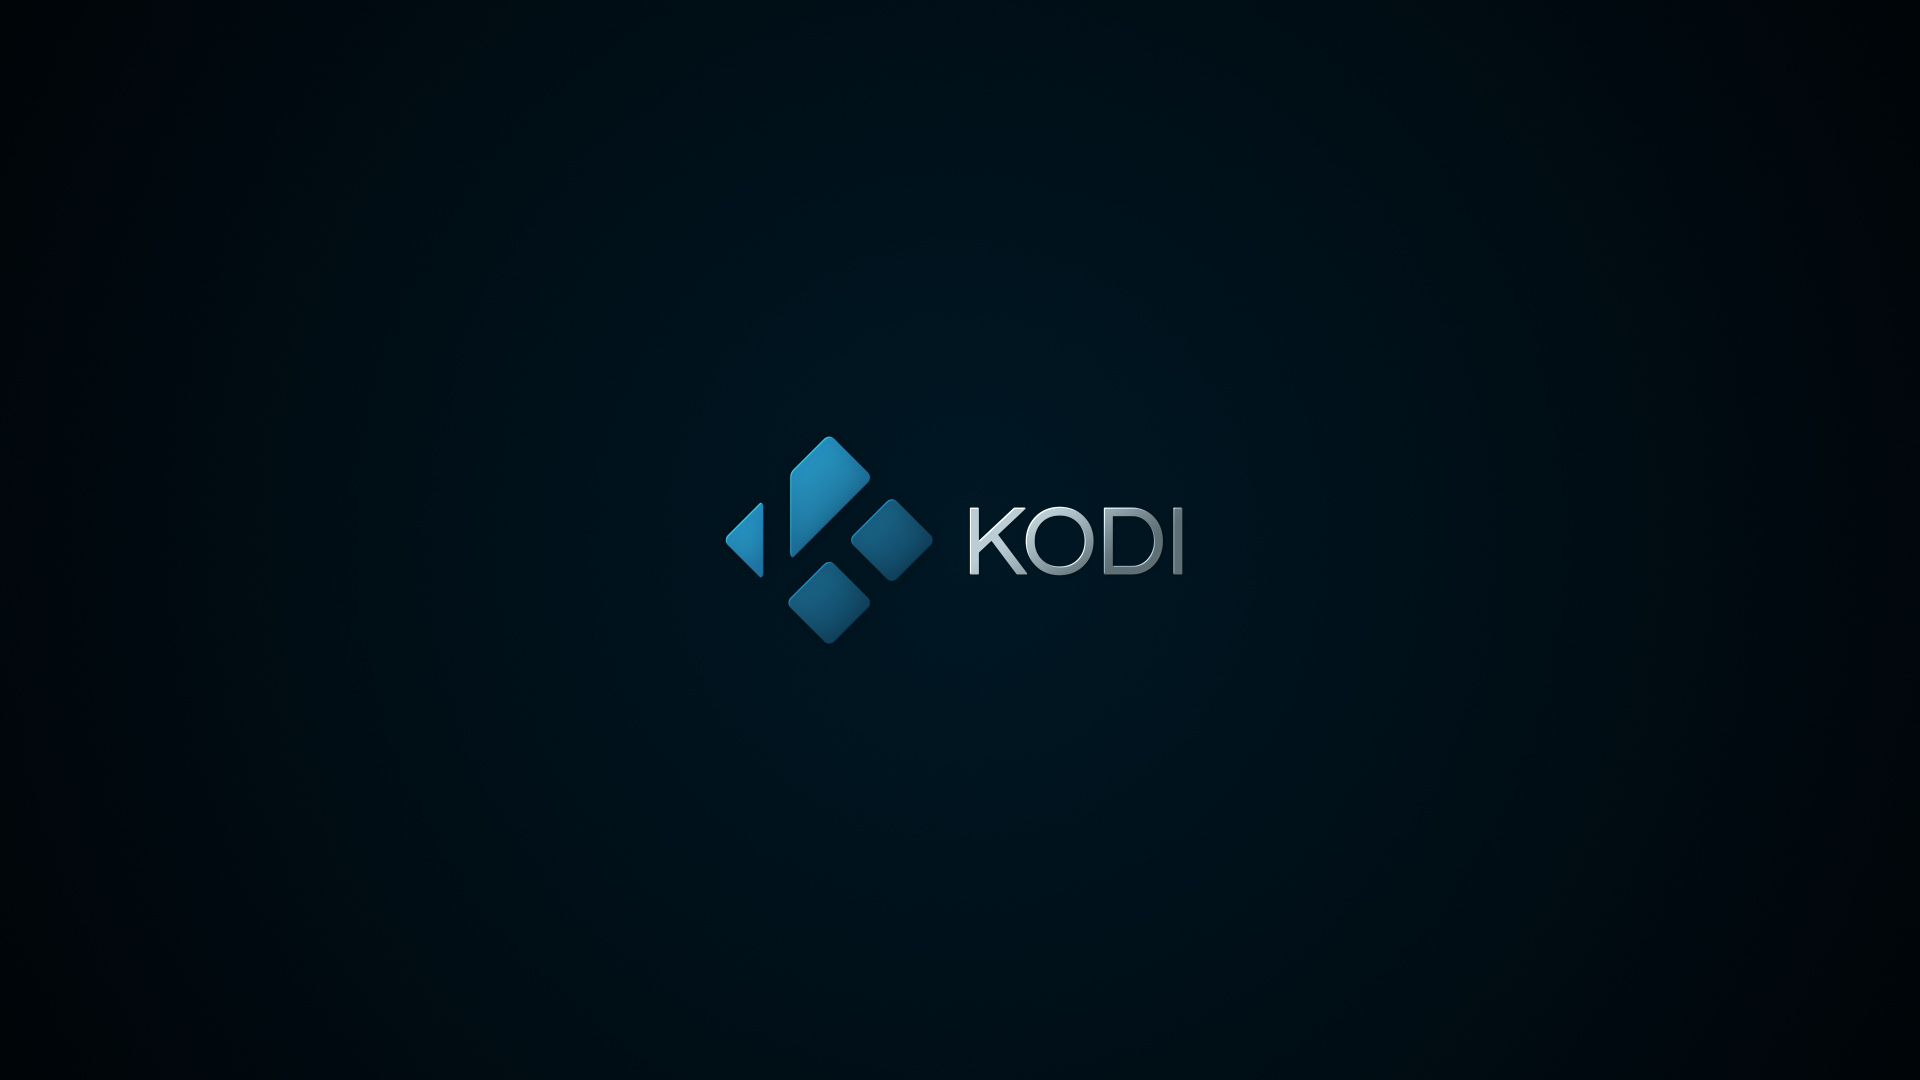 File:Kodi-Wallpaper-3B-1080p samfisher.jpg